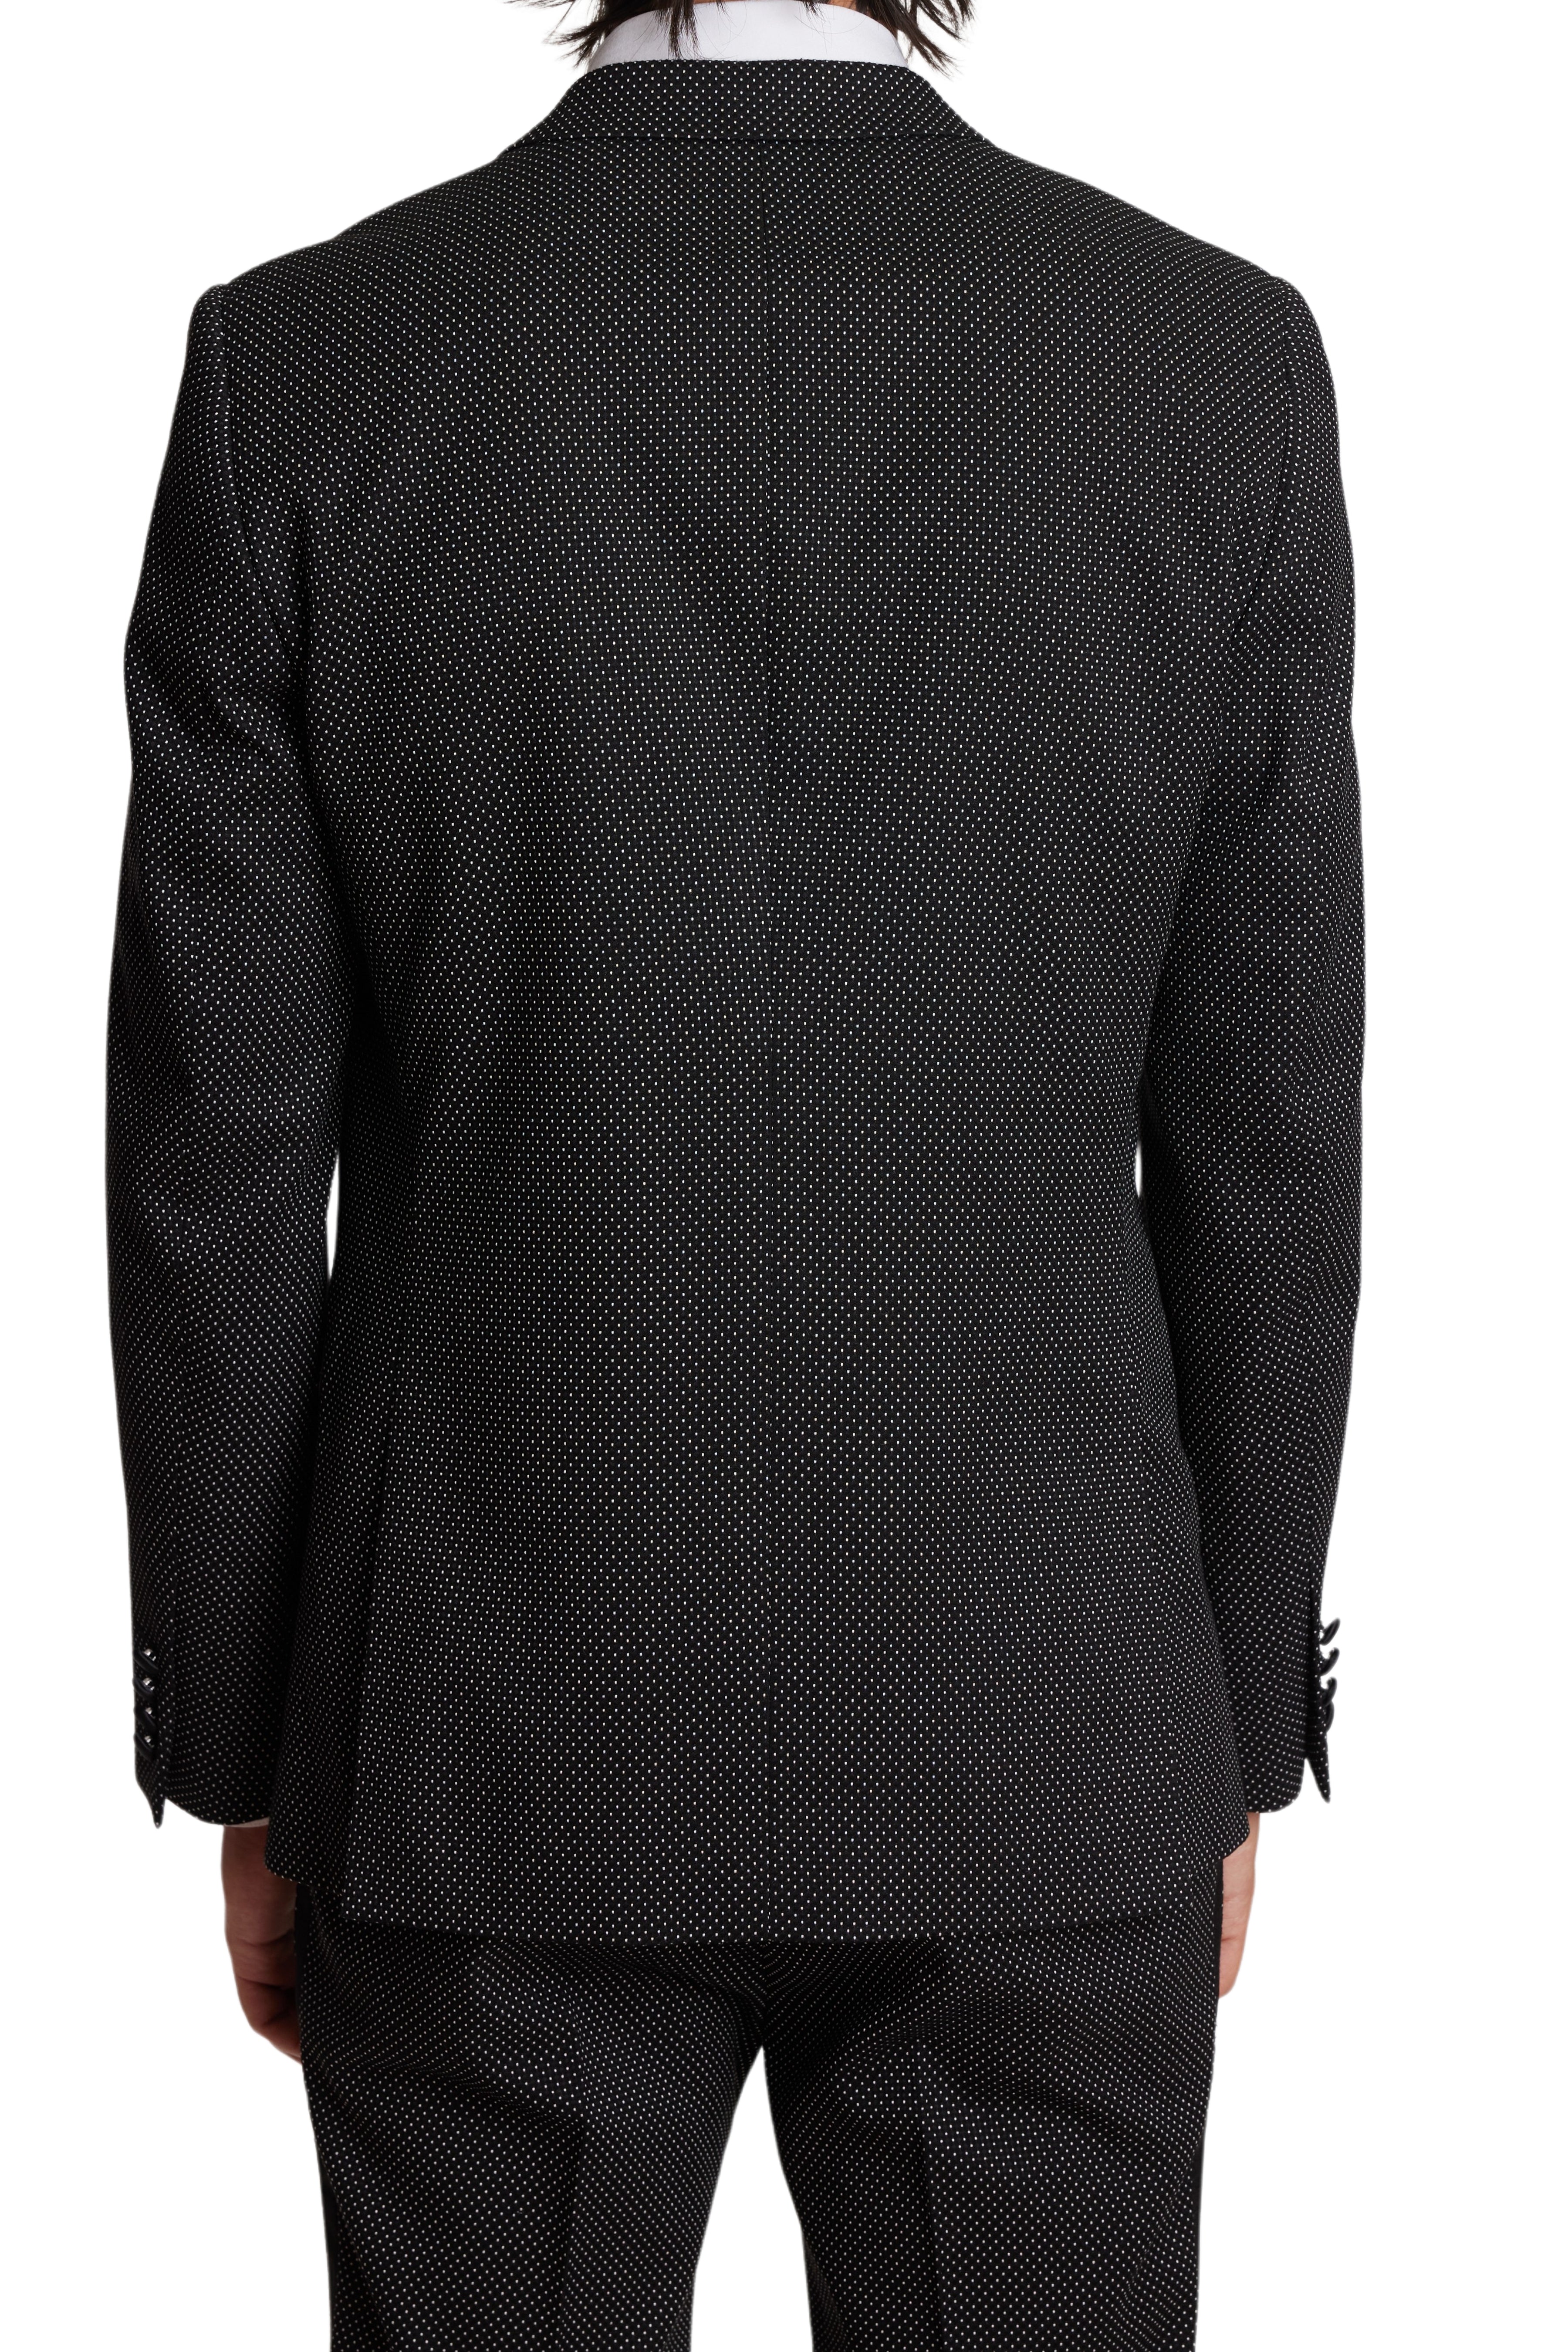 Grosvenor Peak Tux Jacket - slim - Black & White Dots